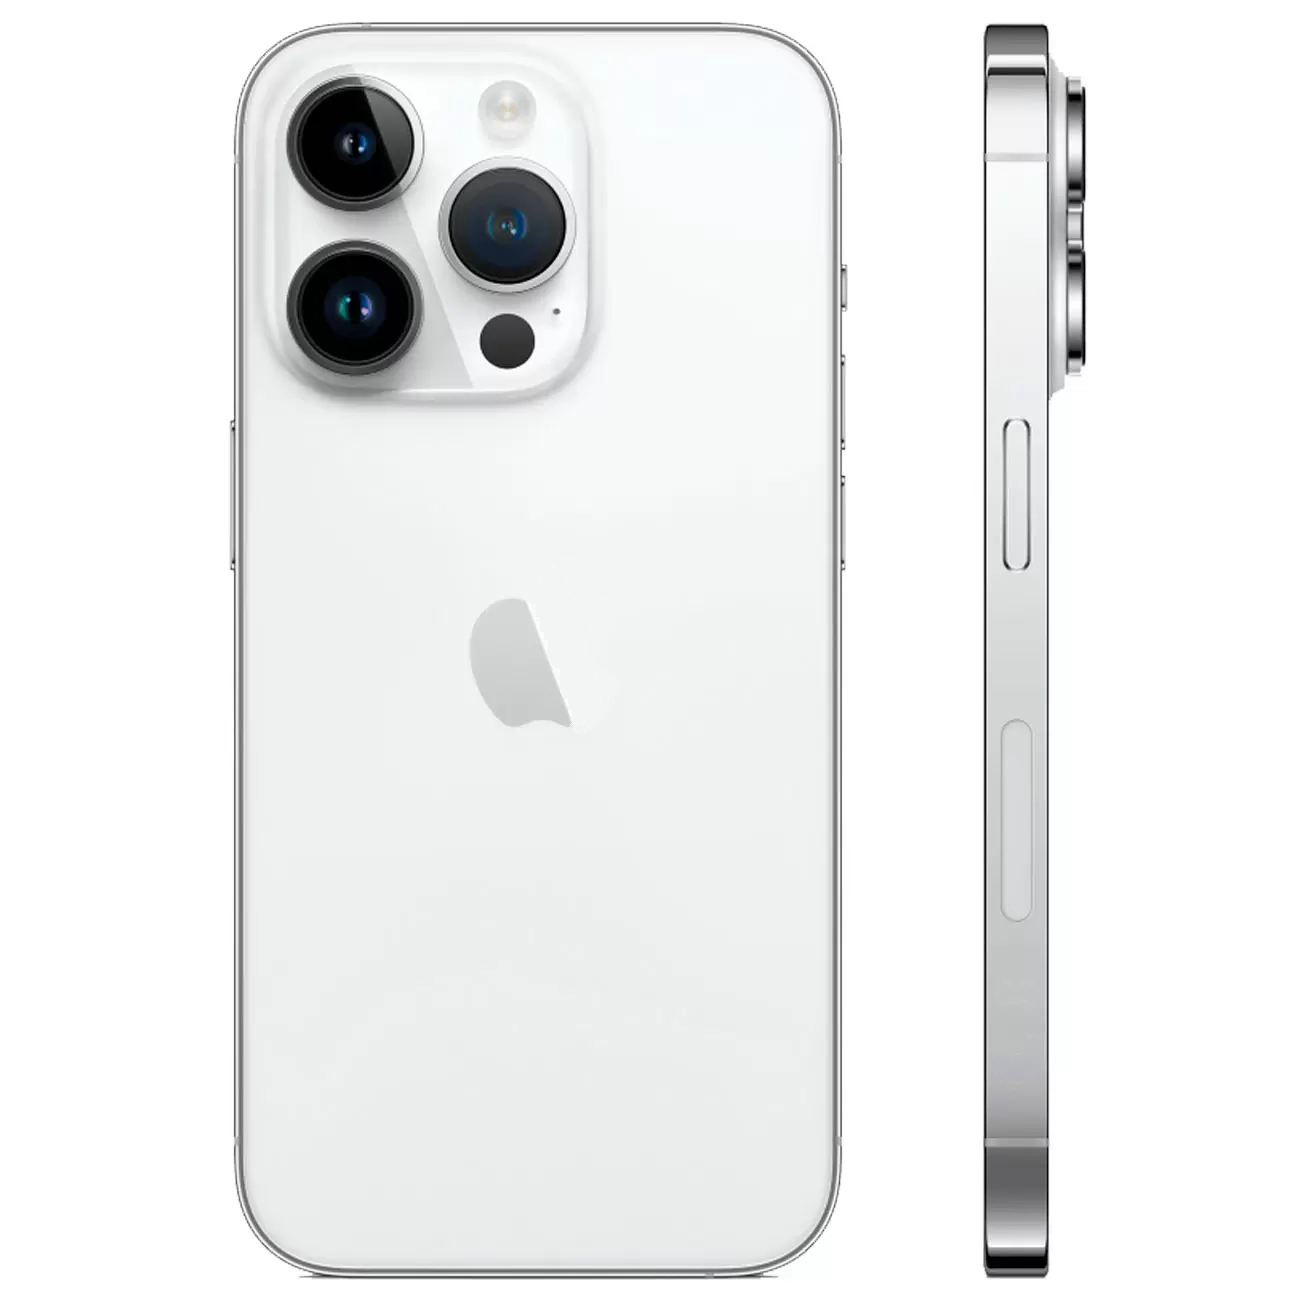 Муляж iPone 14 Pro Max белый